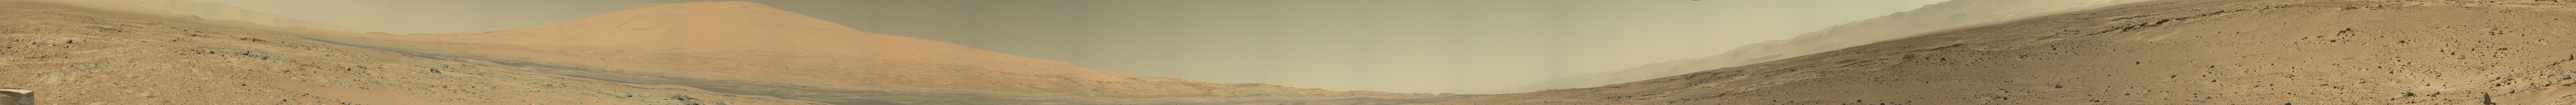 Панорама переданная марсоходом Curiosity